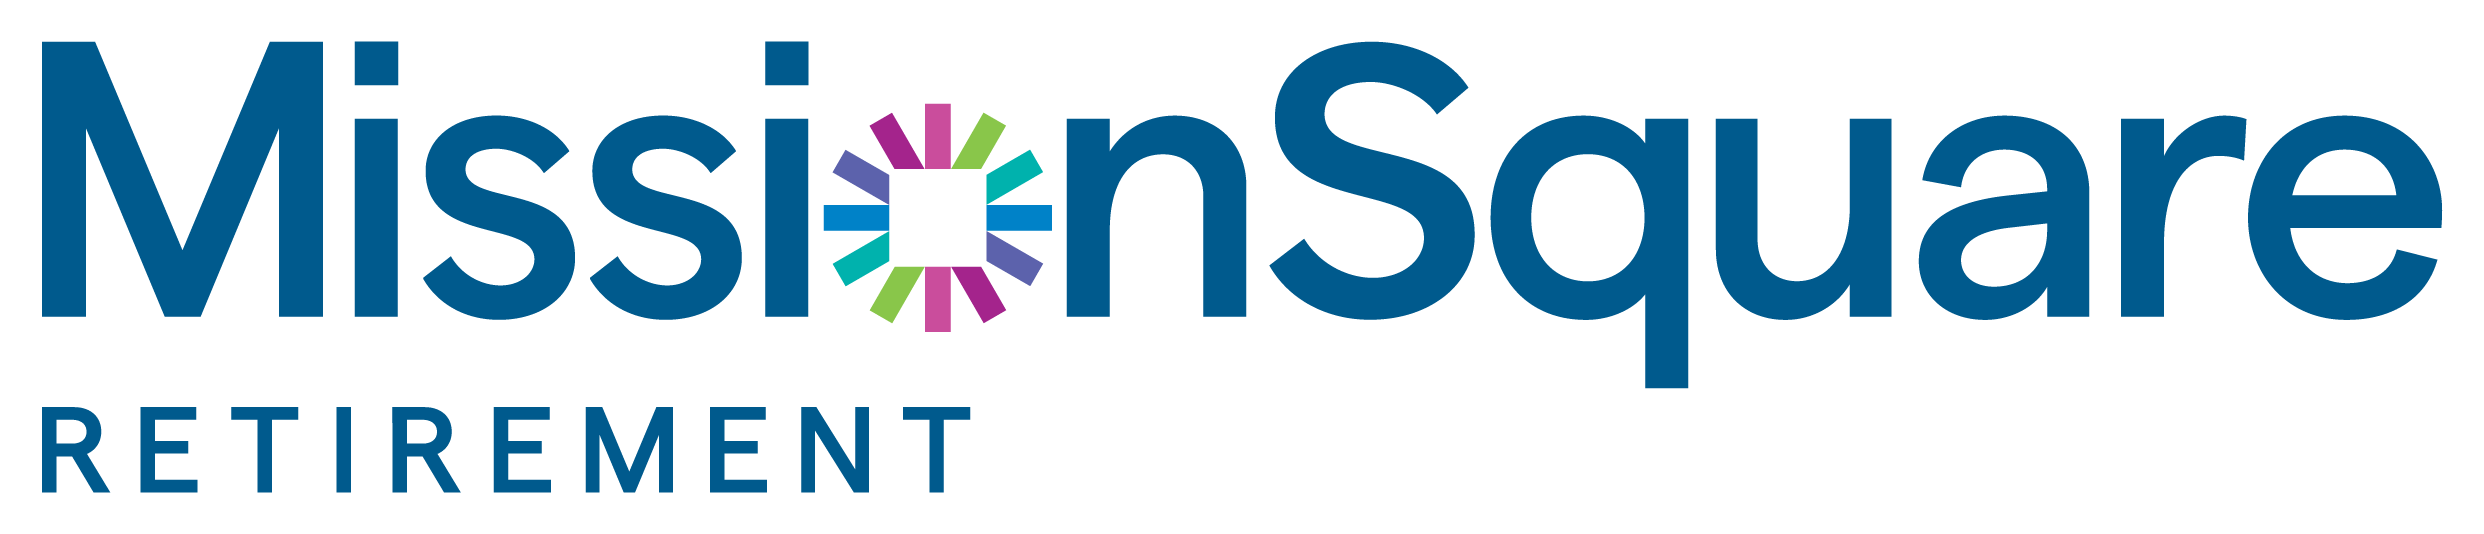 MissionSquare_retirement-logo_h_rgb_pos